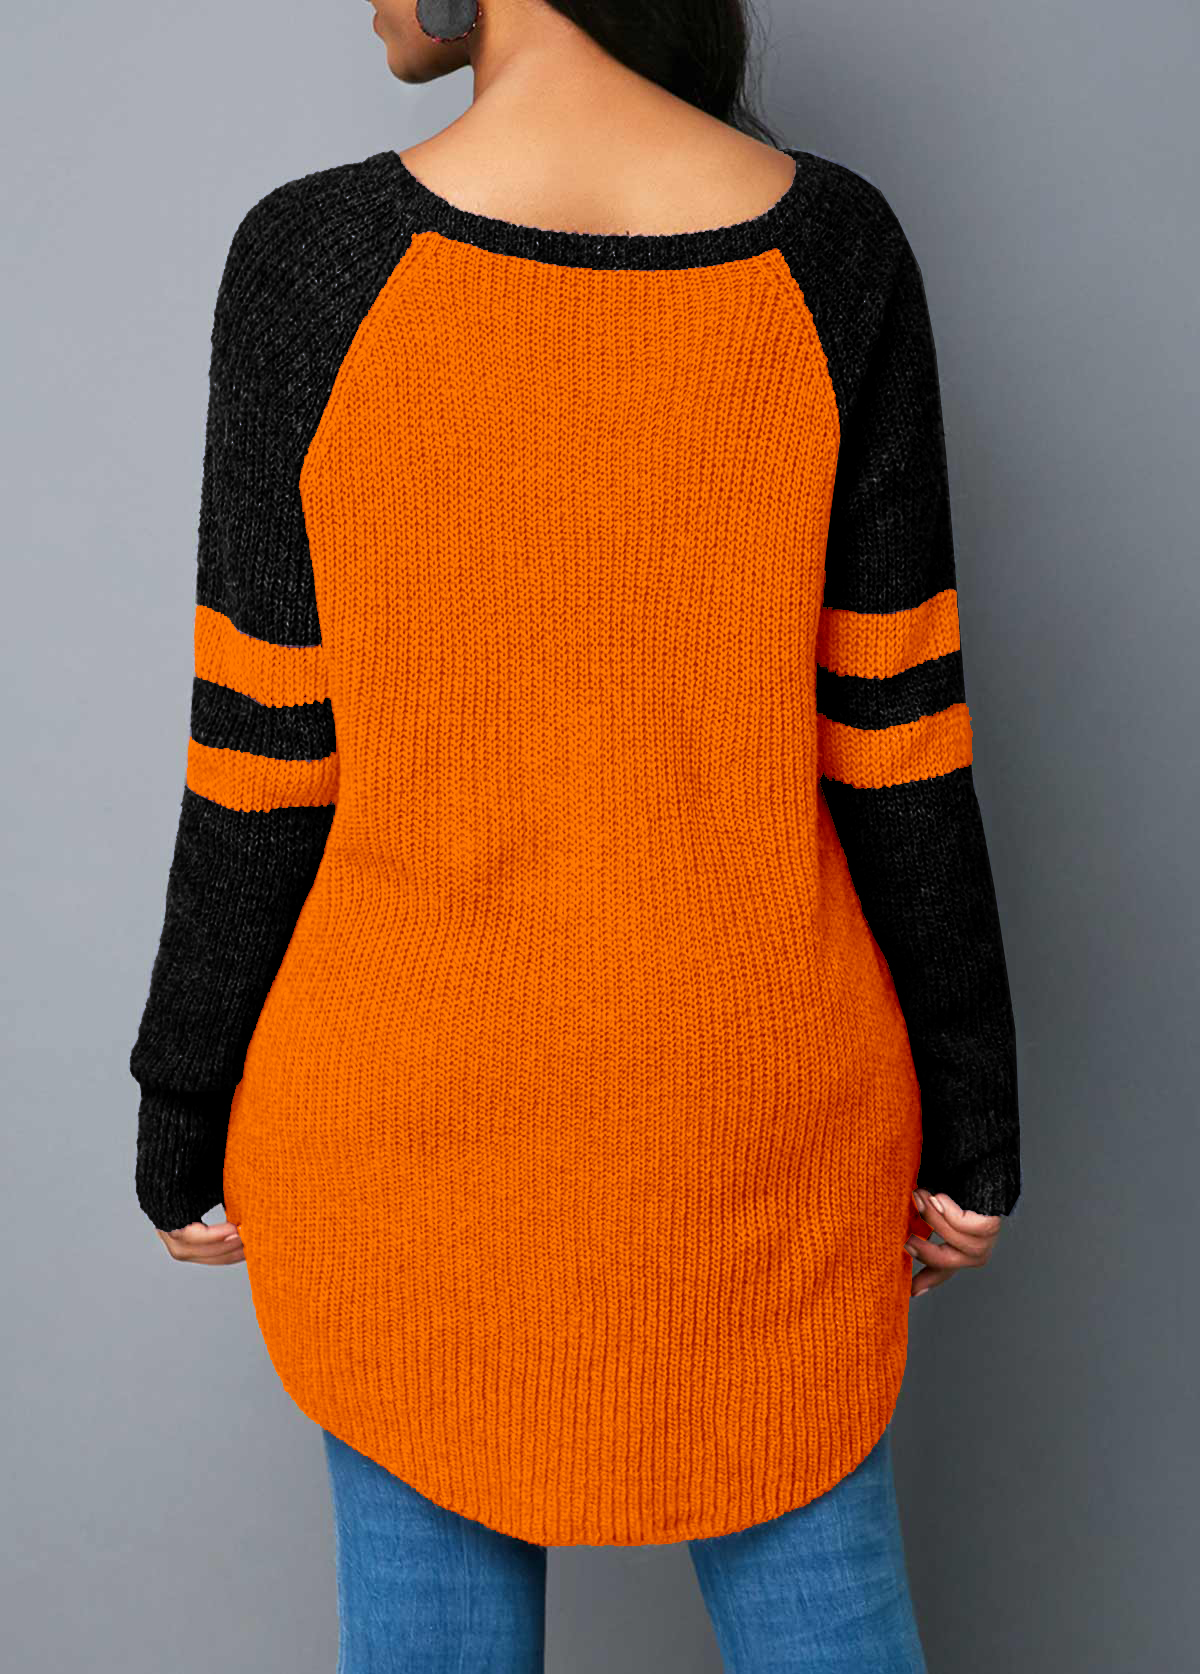 Long Sleeve Heart Design Contrast Sweater